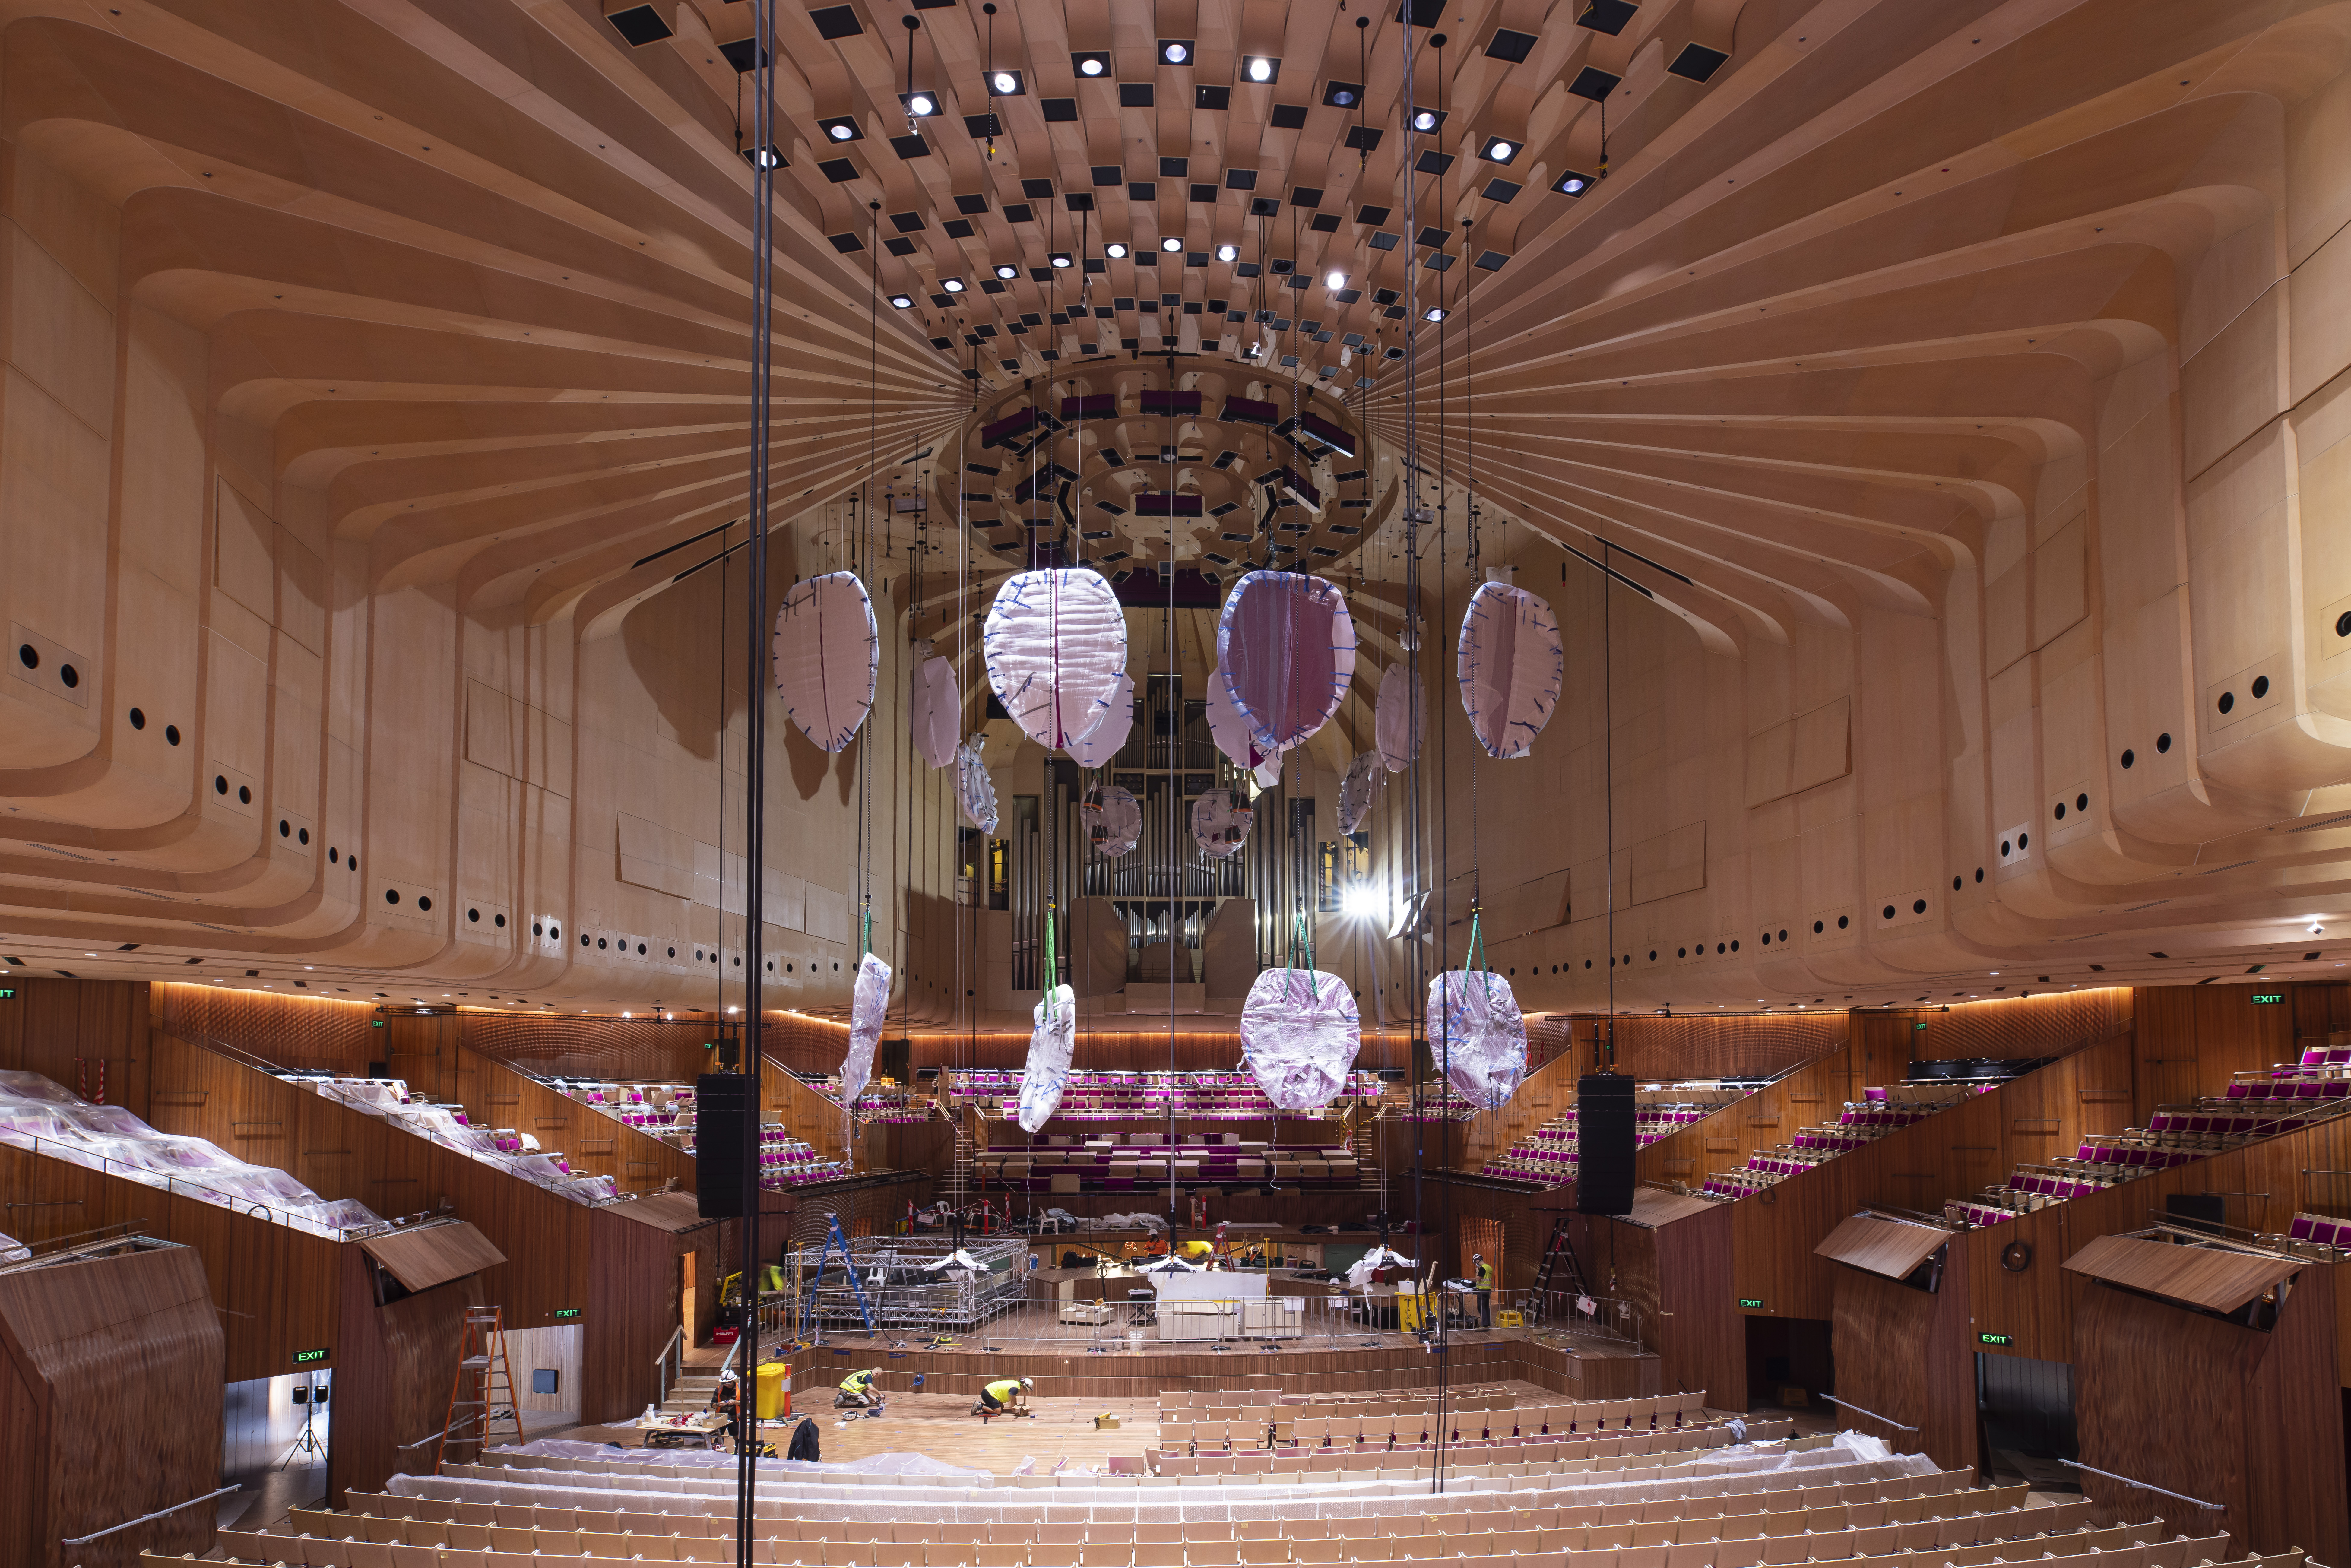 The Concert Hall under renovation.